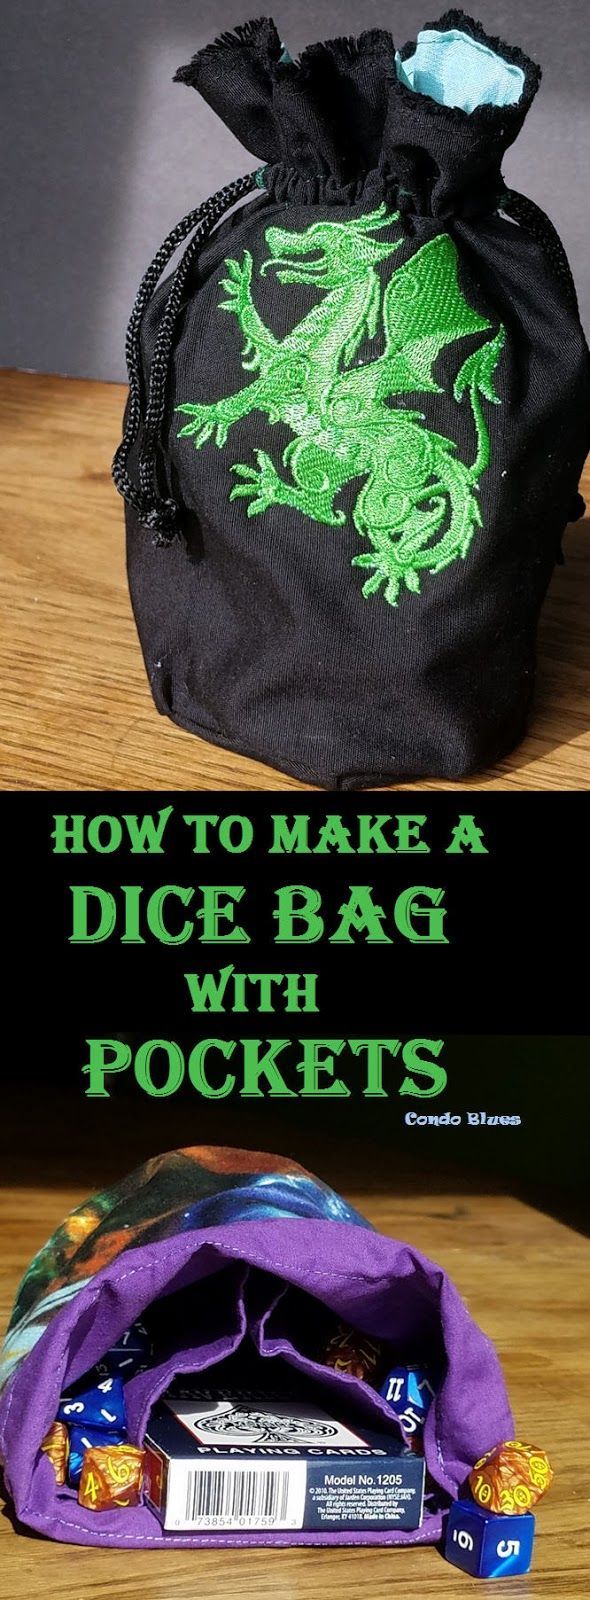 17 diy Bag with pockets ideas